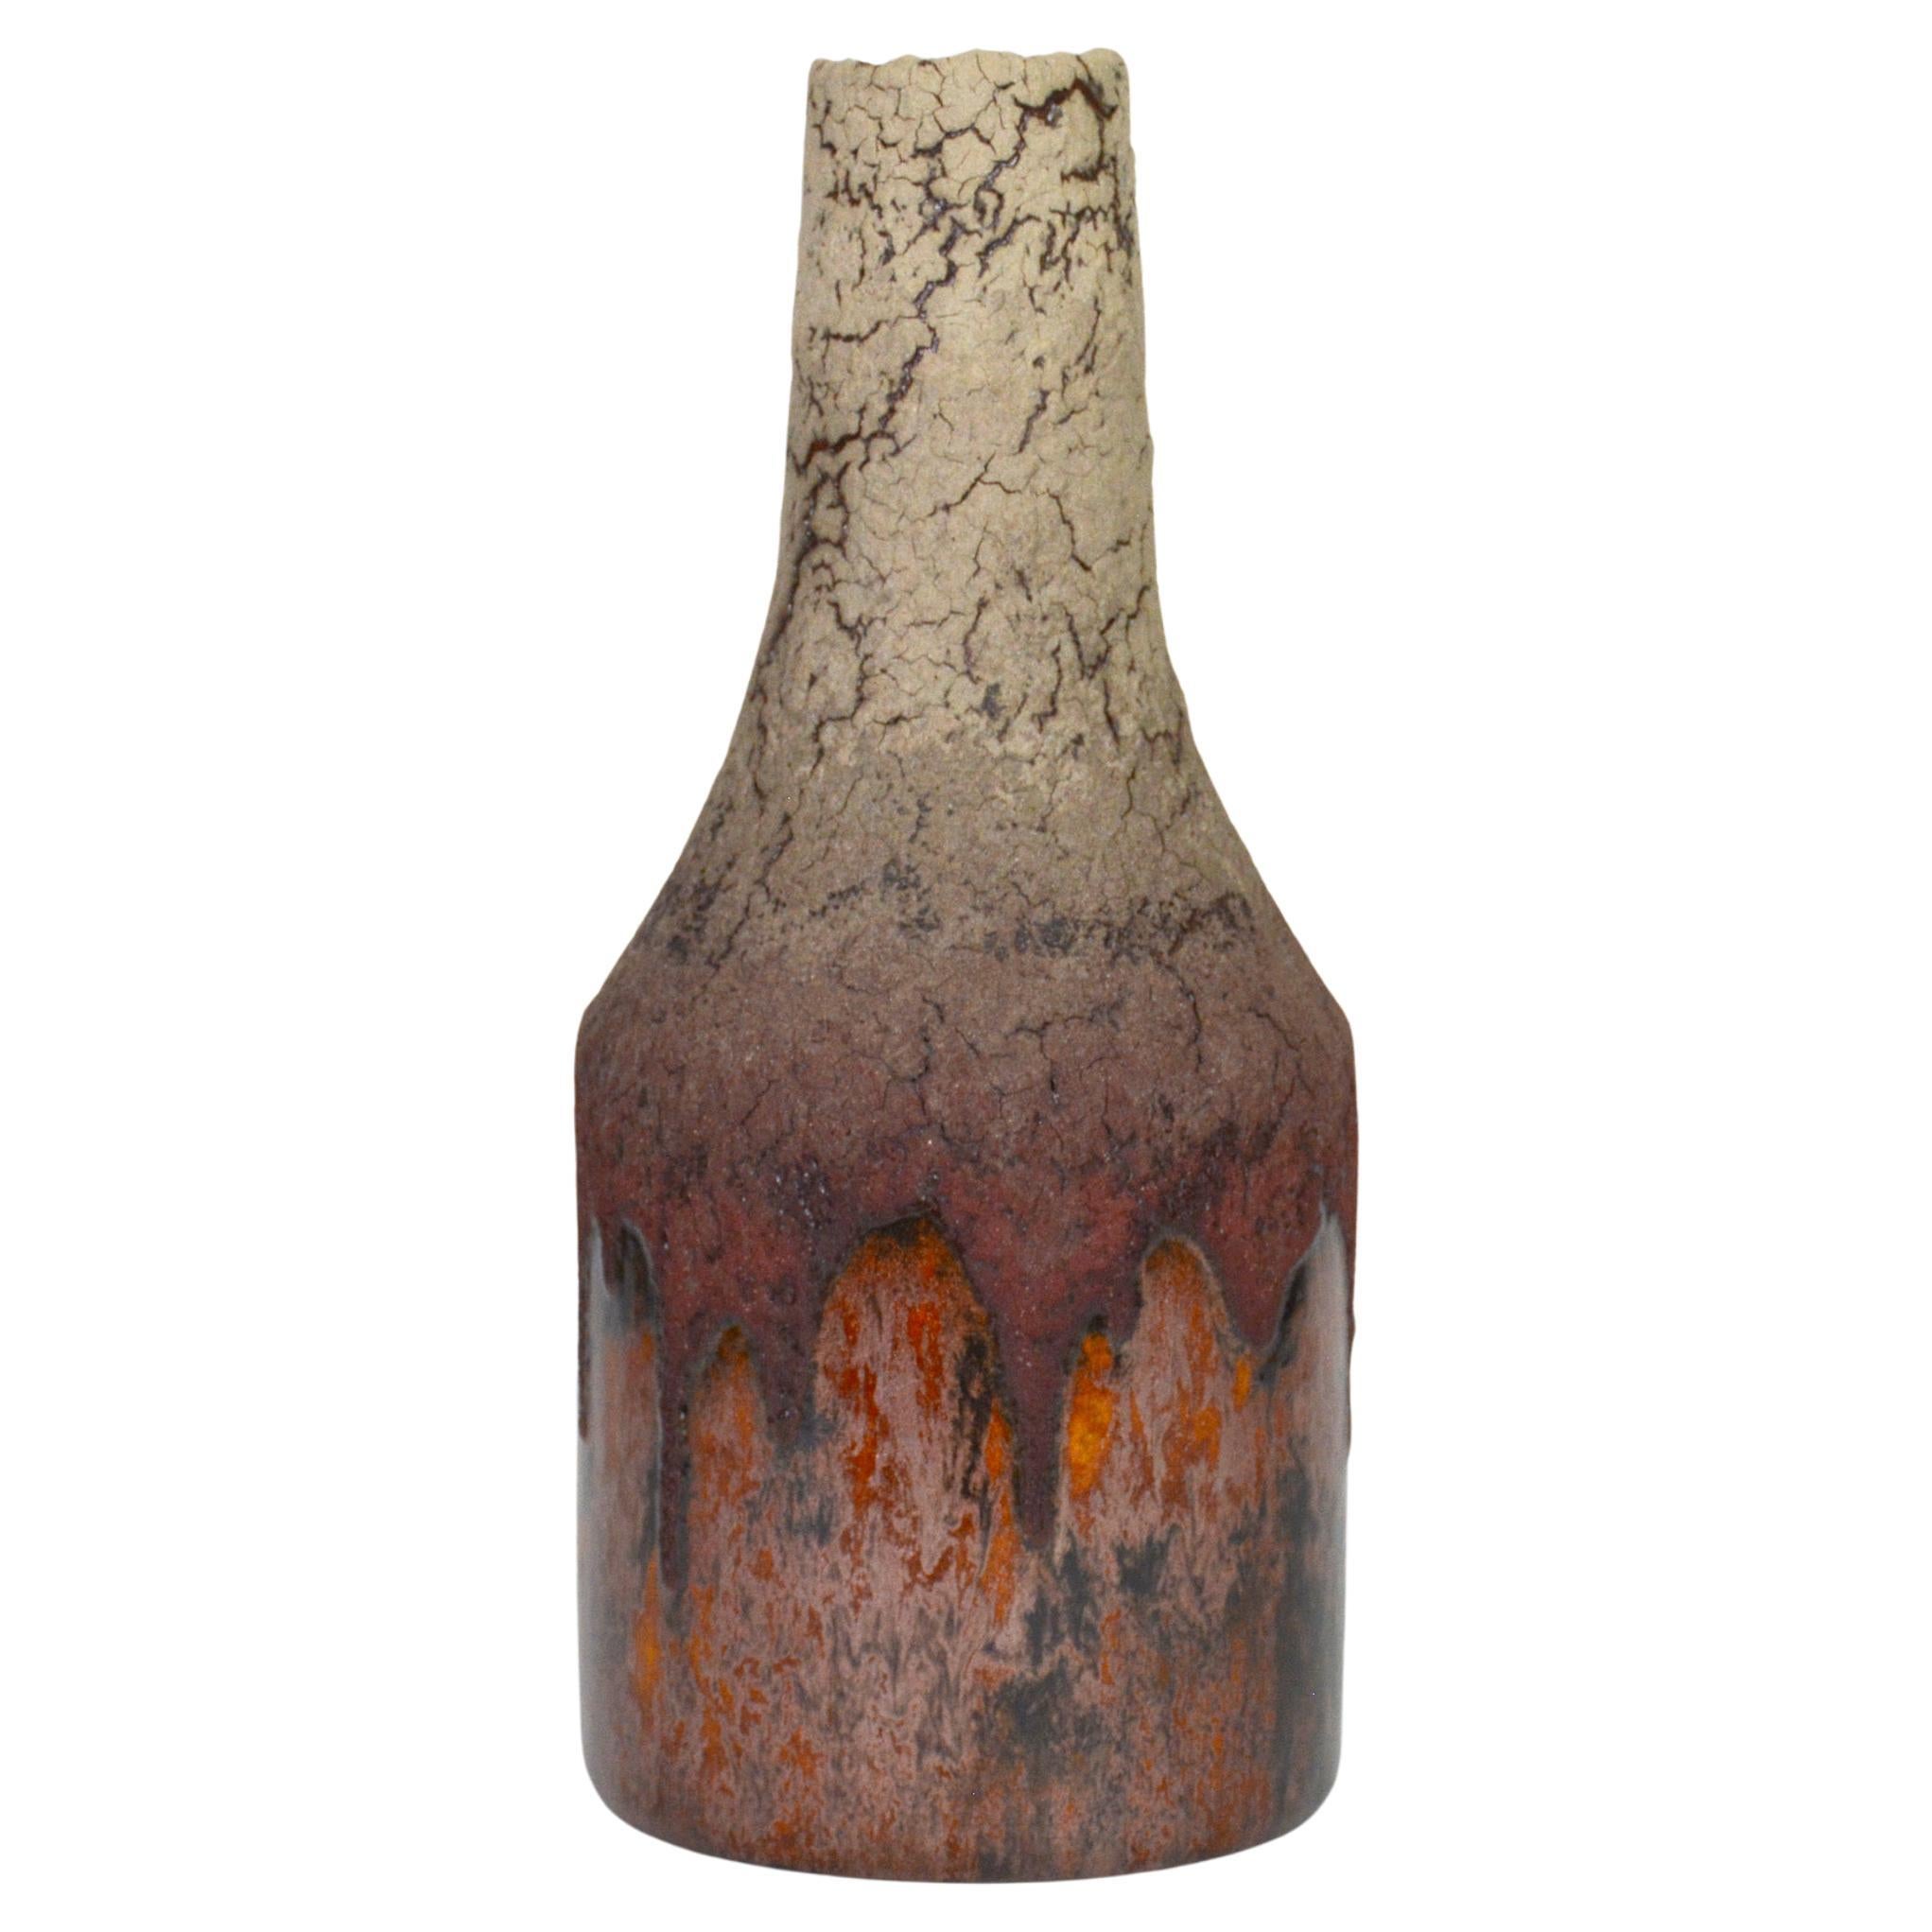 Ceramic Bottle, Decorative Vase by William Edwards   Mid-Century Modern